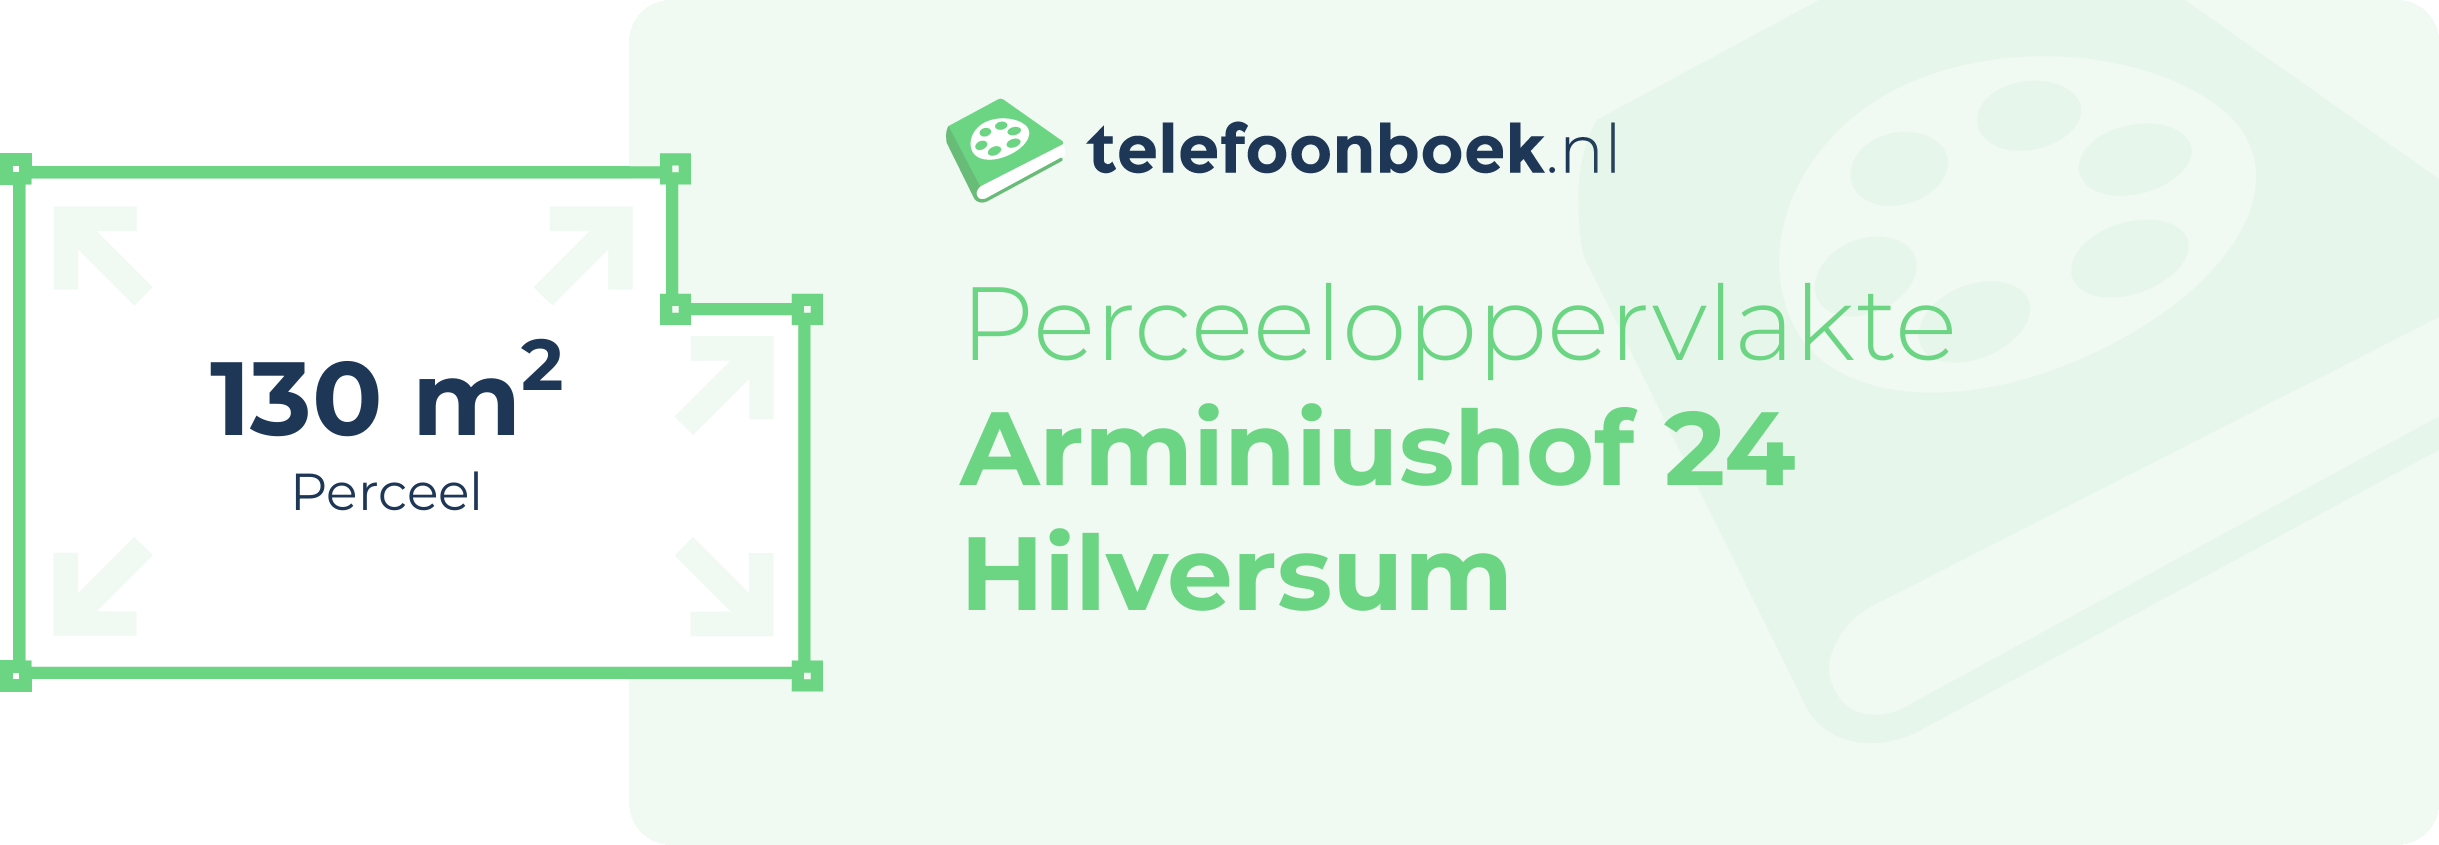 Perceeloppervlakte Arminiushof 24 Hilversum